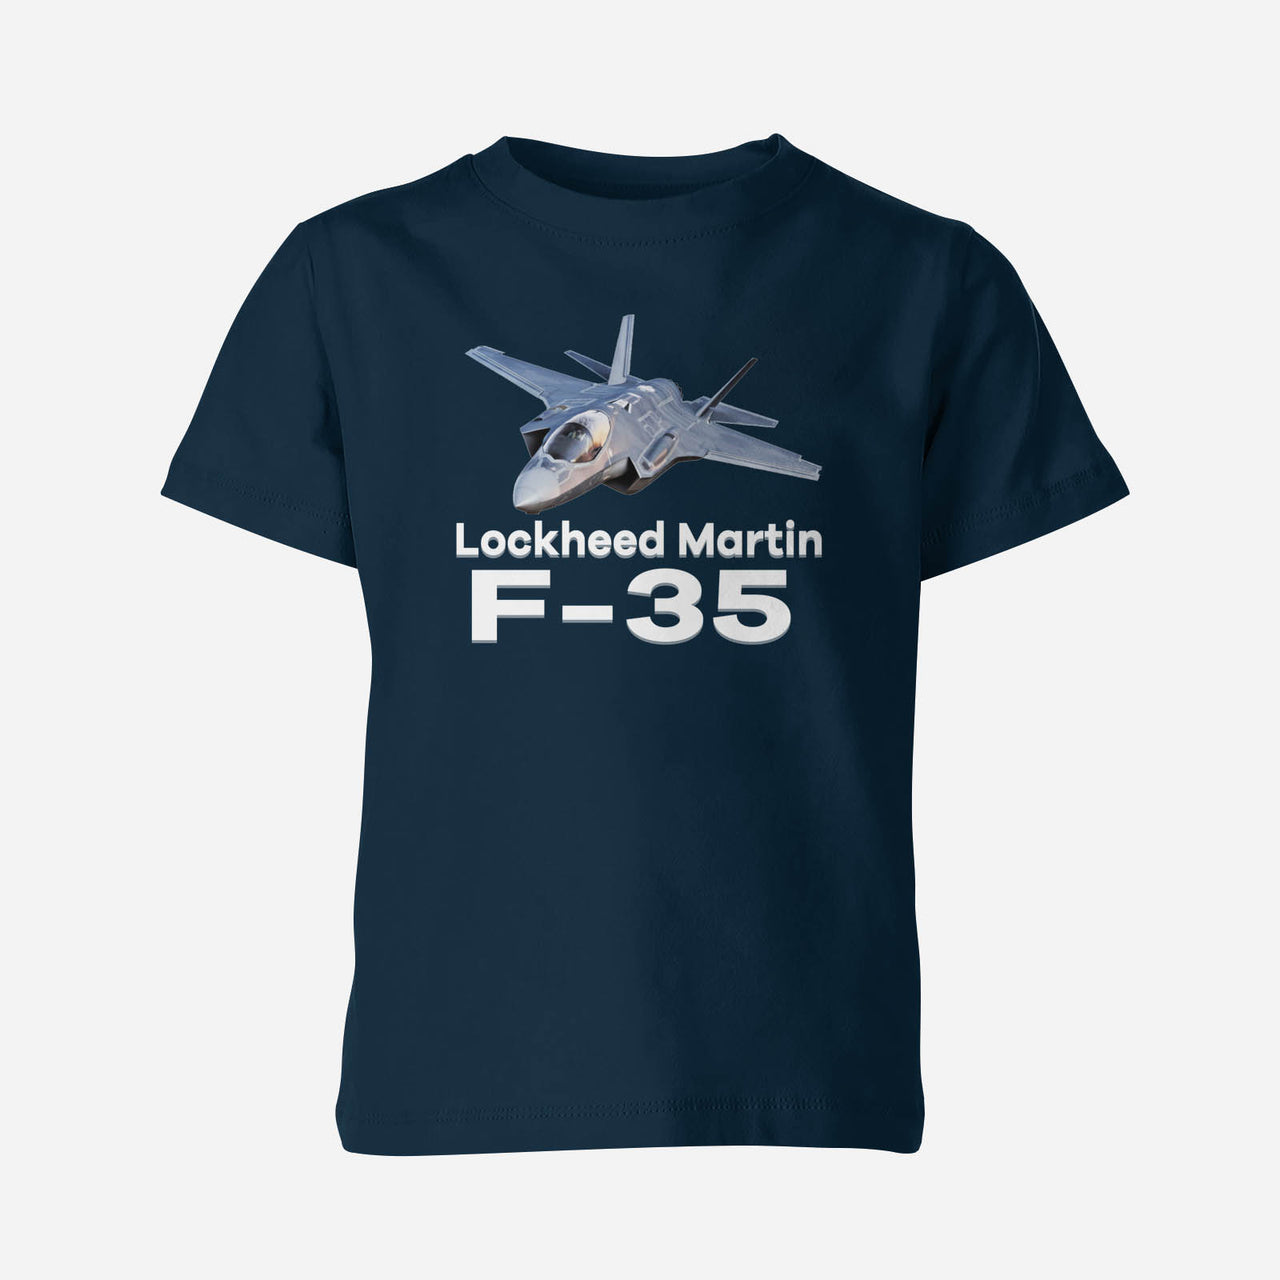 The Lockheed Martin F35 Designed Children T-Shirts